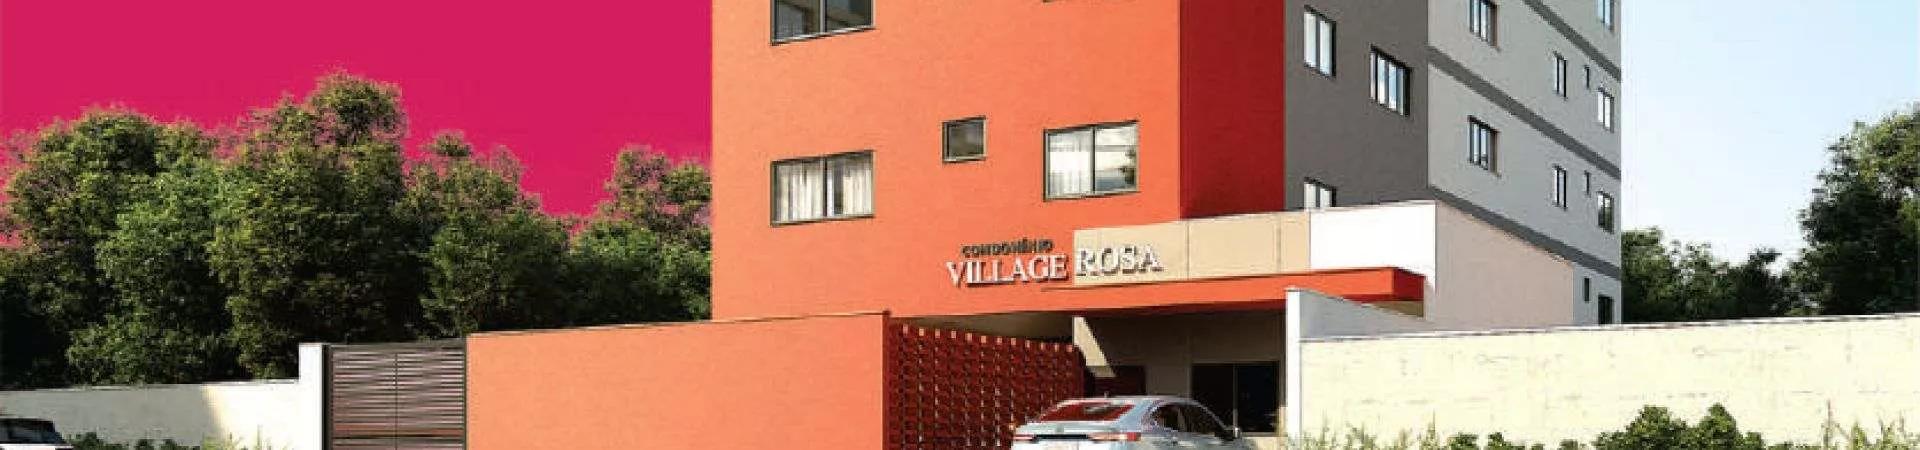 Village Rosa, da Macon Engenharia